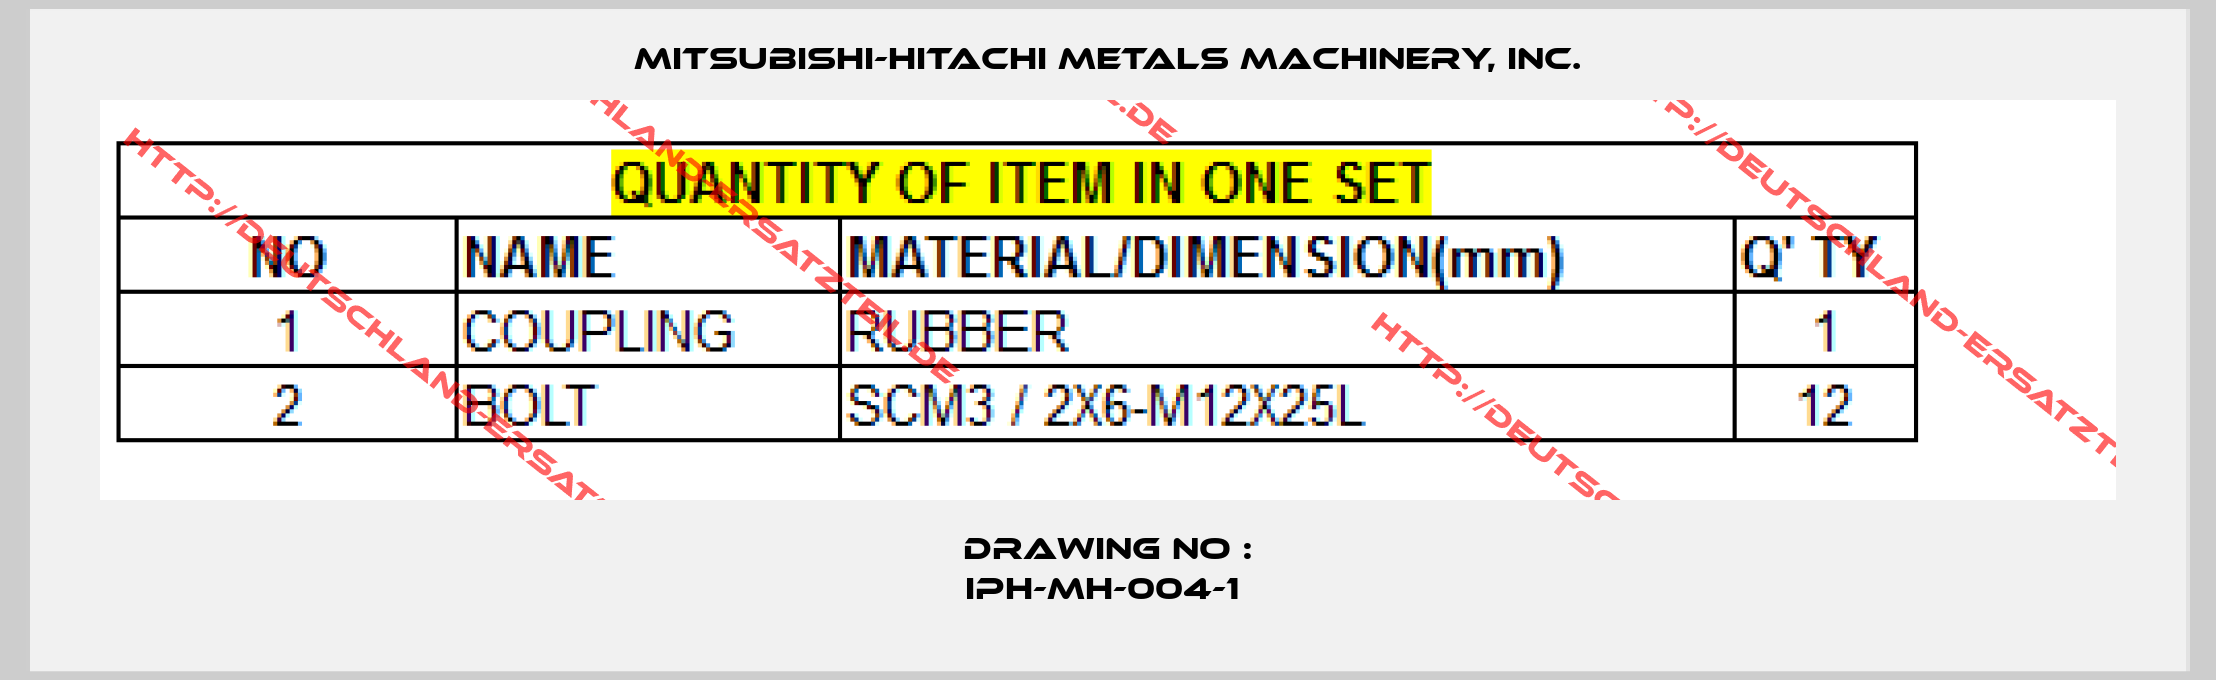 Mitsubishi-Hitachi Metals Machinery, Inc.-Drawing no : IPH-MH-004-1 